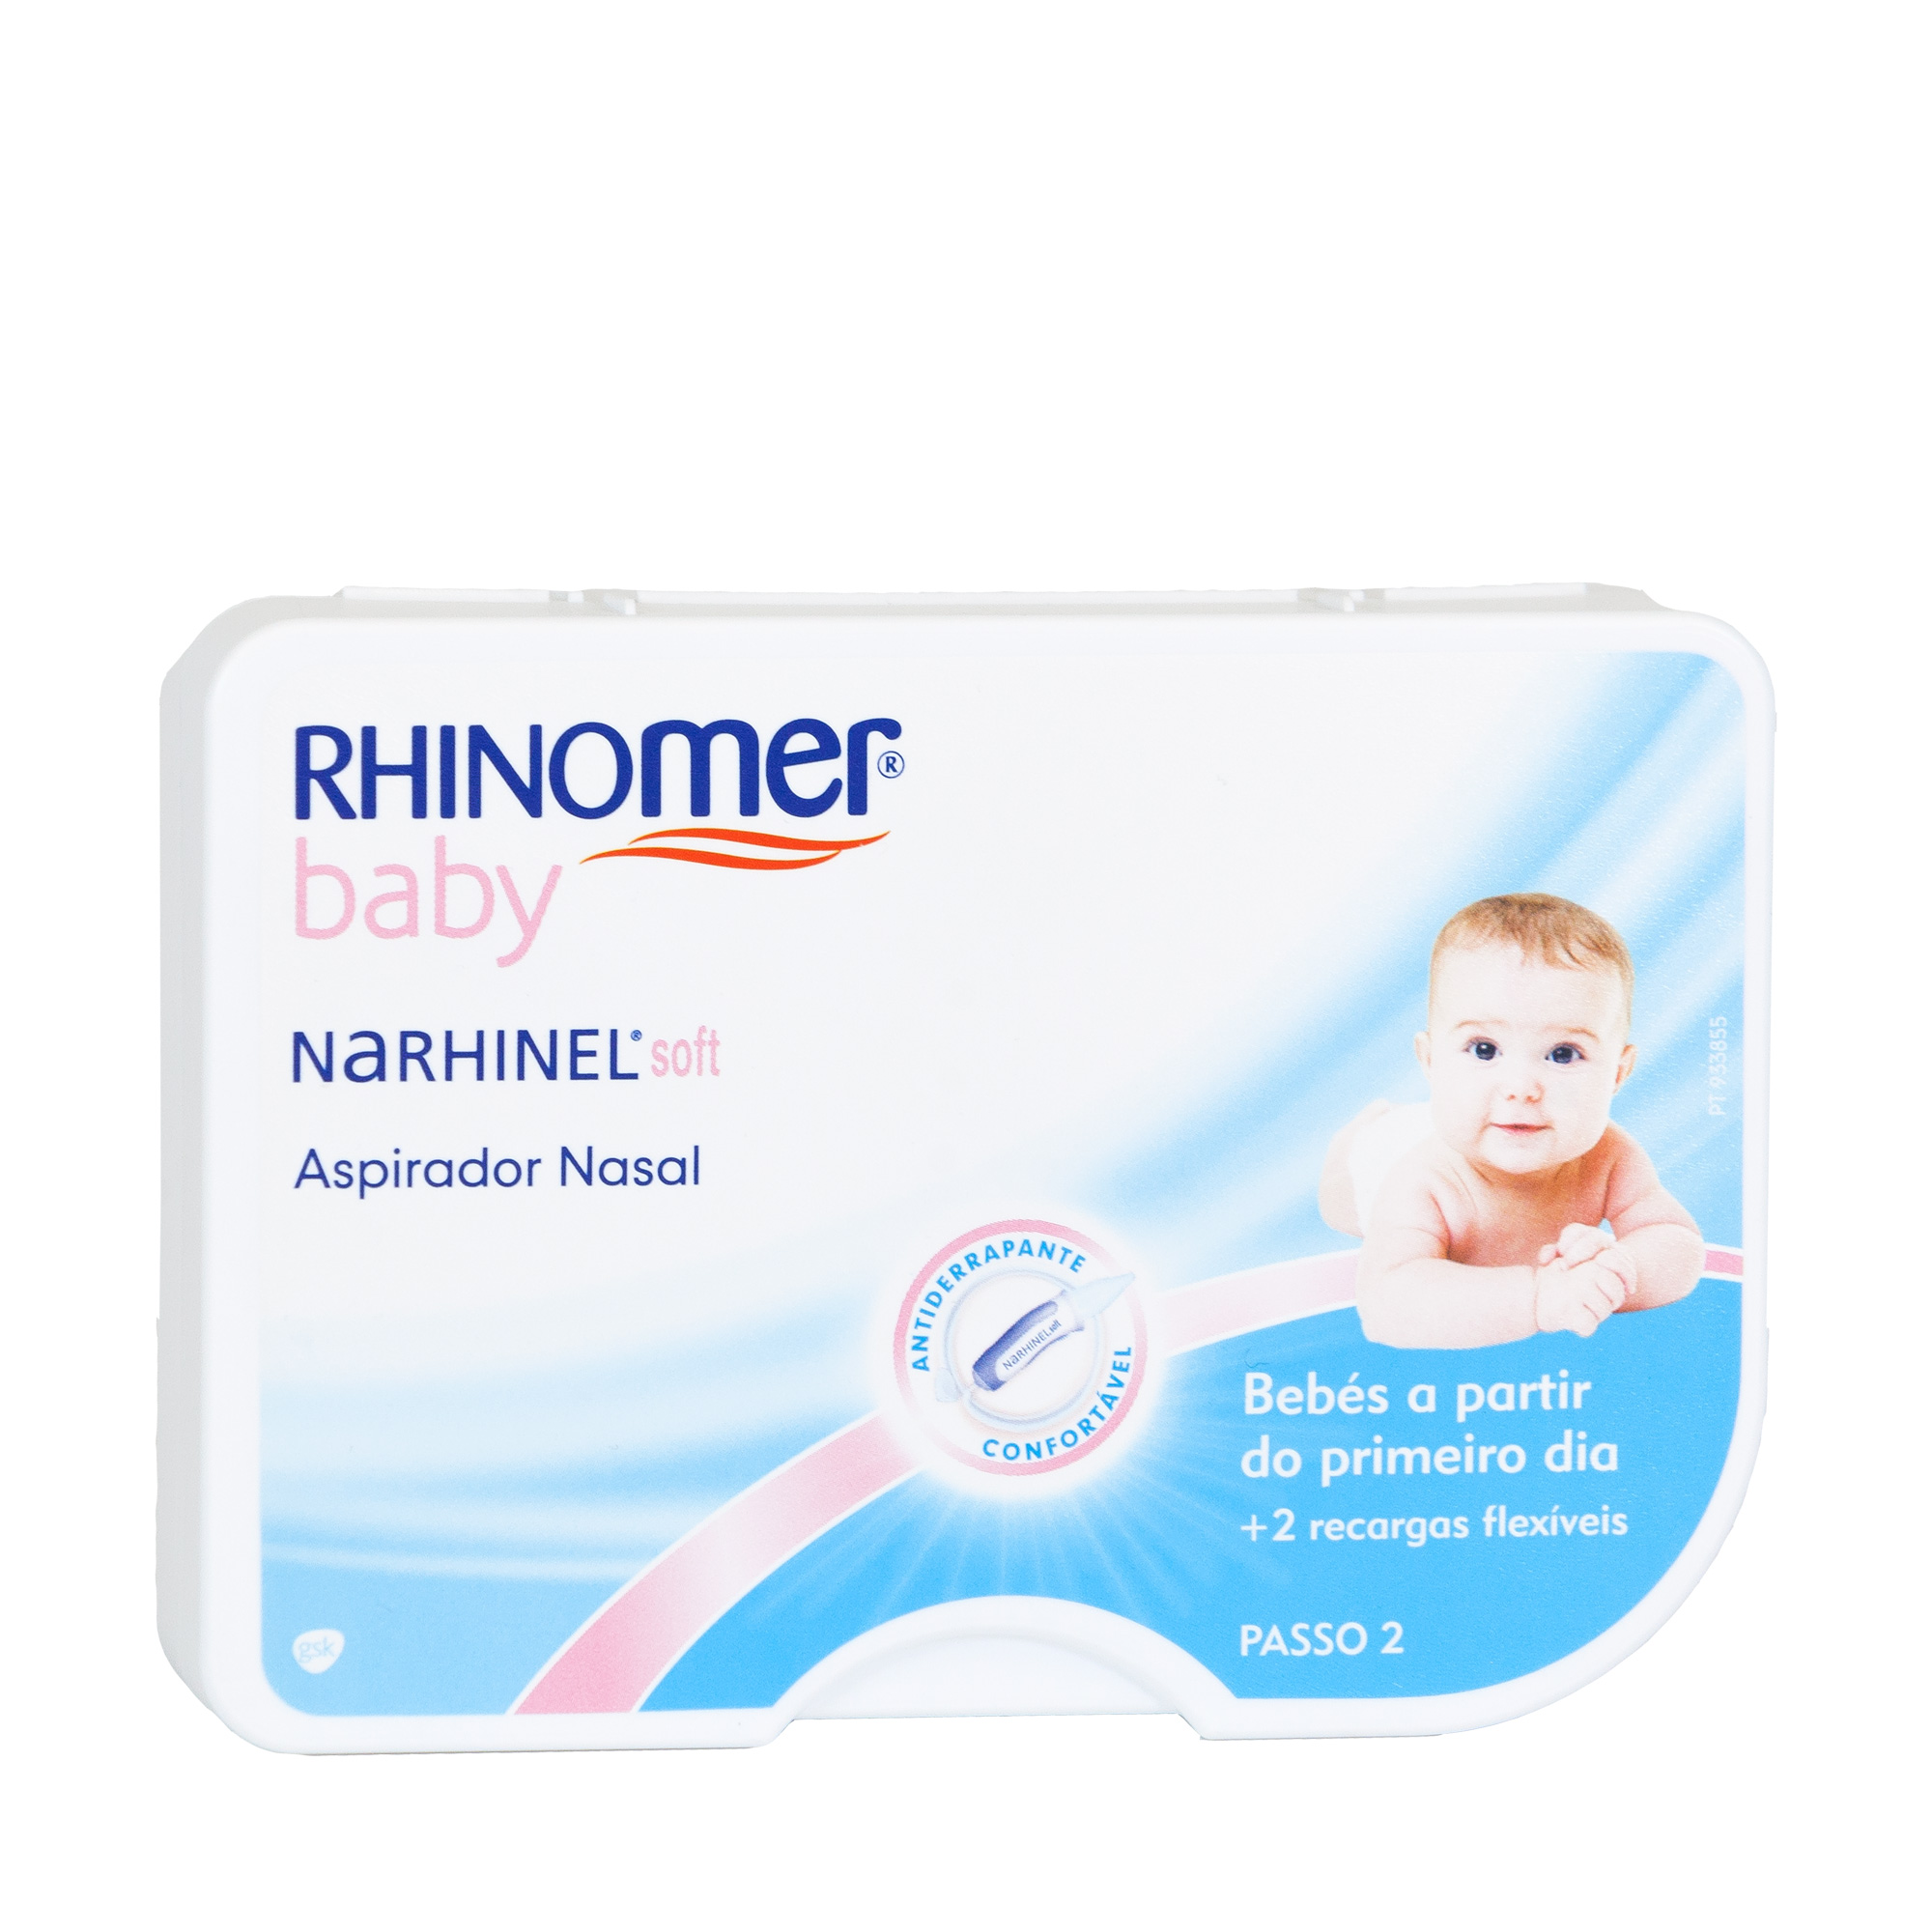 Mercadão - BemEstar: Aspirador Nasal Narhinel Soft Rhinomer Baby